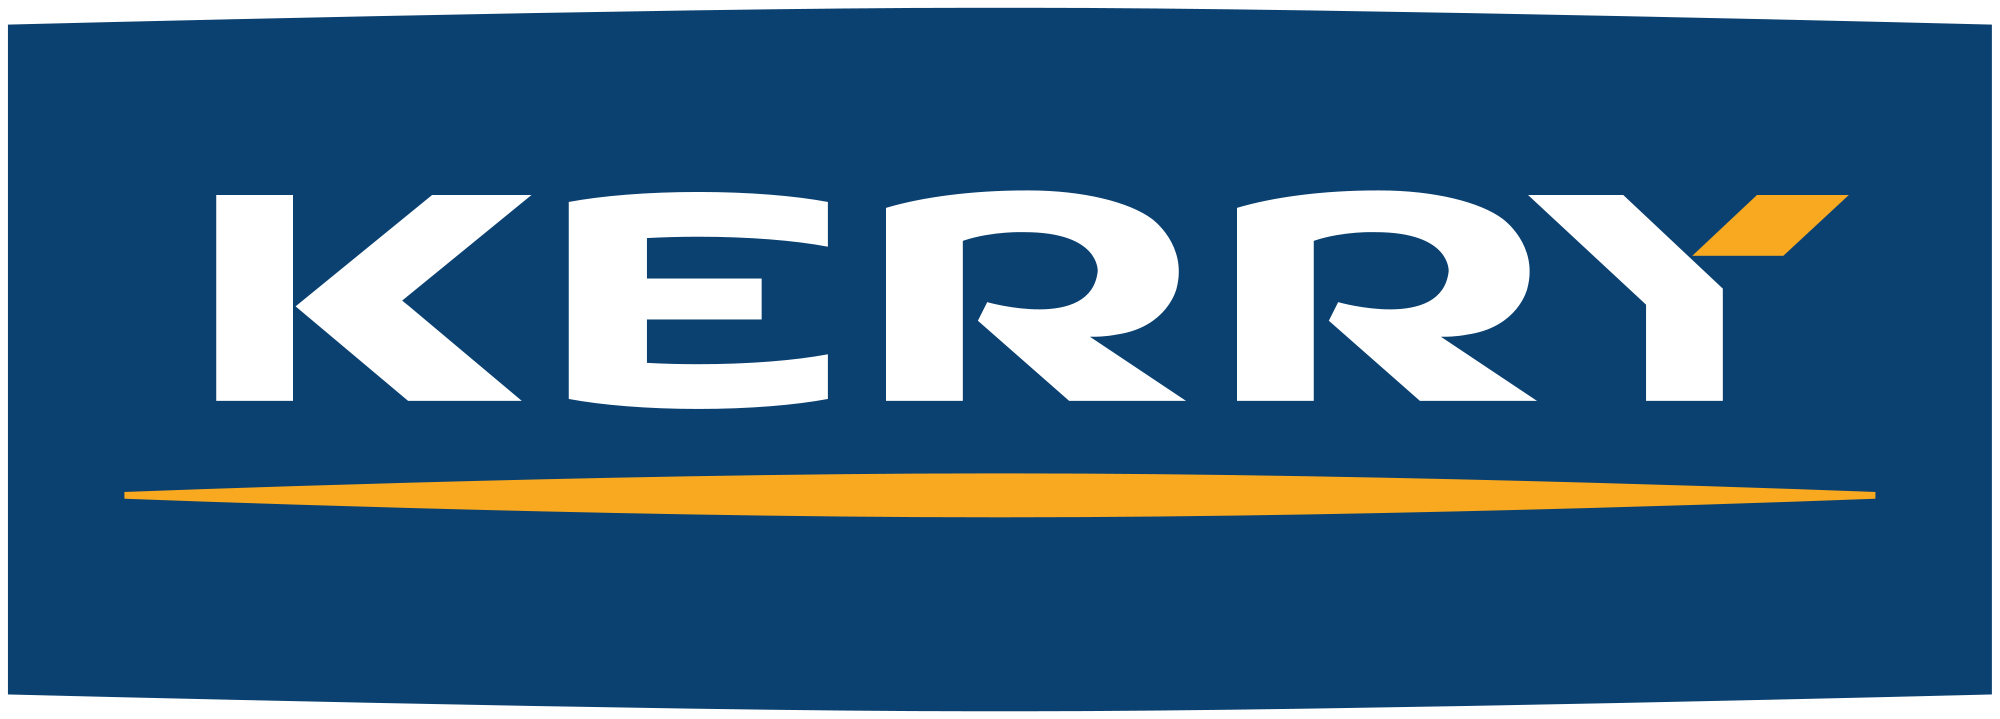 Enoten Logo - About Event Zero